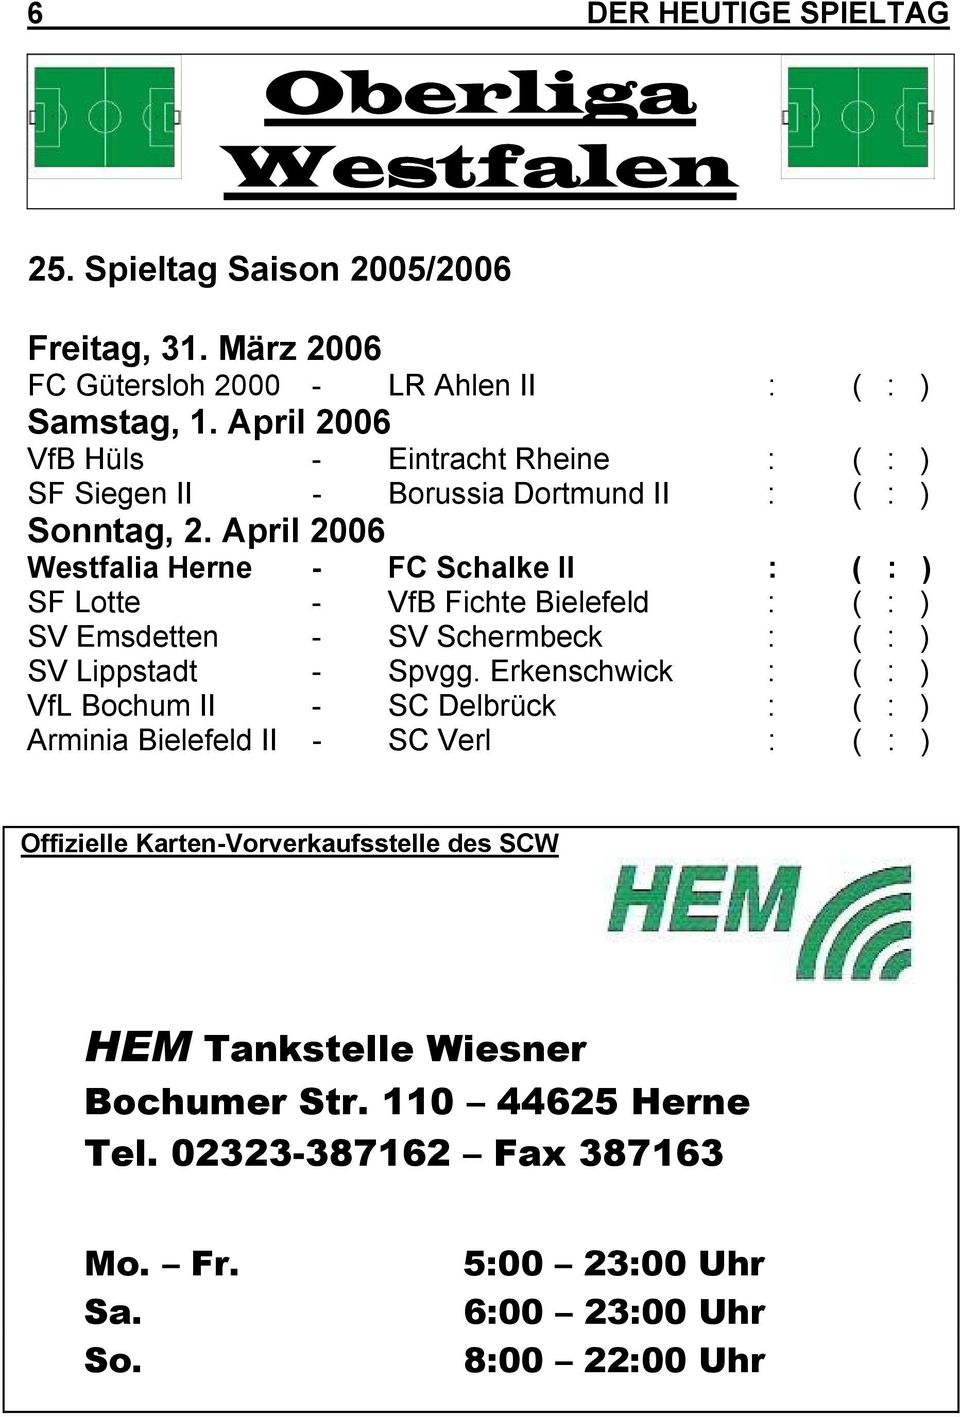 April 2006 Westfalia Herne - FC Schalke II : ( : ) SF Lotte - VfB Fichte Bielefeld : ( : ) SV Emsdetten - SV Schermbeck : ( : ) SV Lippstadt - Spvgg.